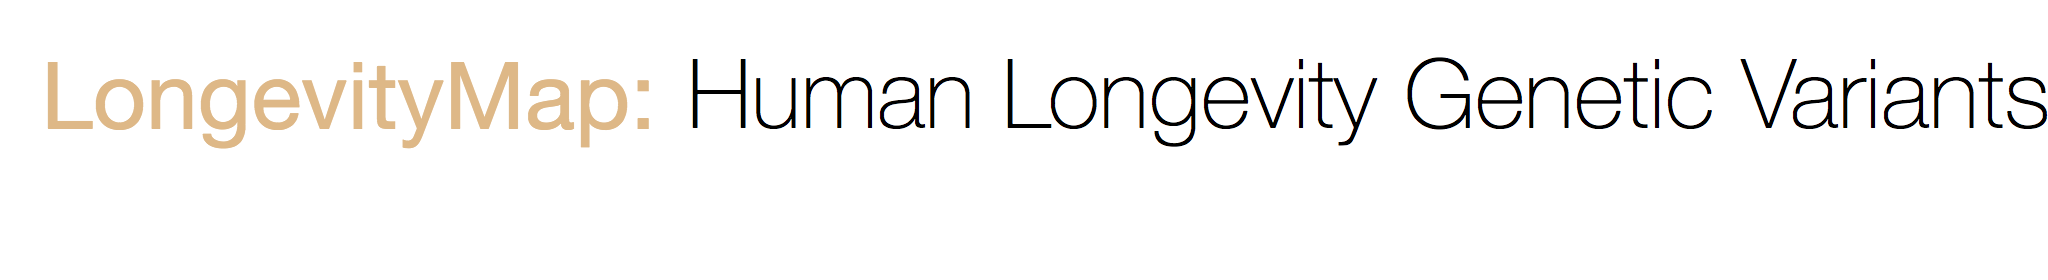 LongevityMap: The human longevity variations database